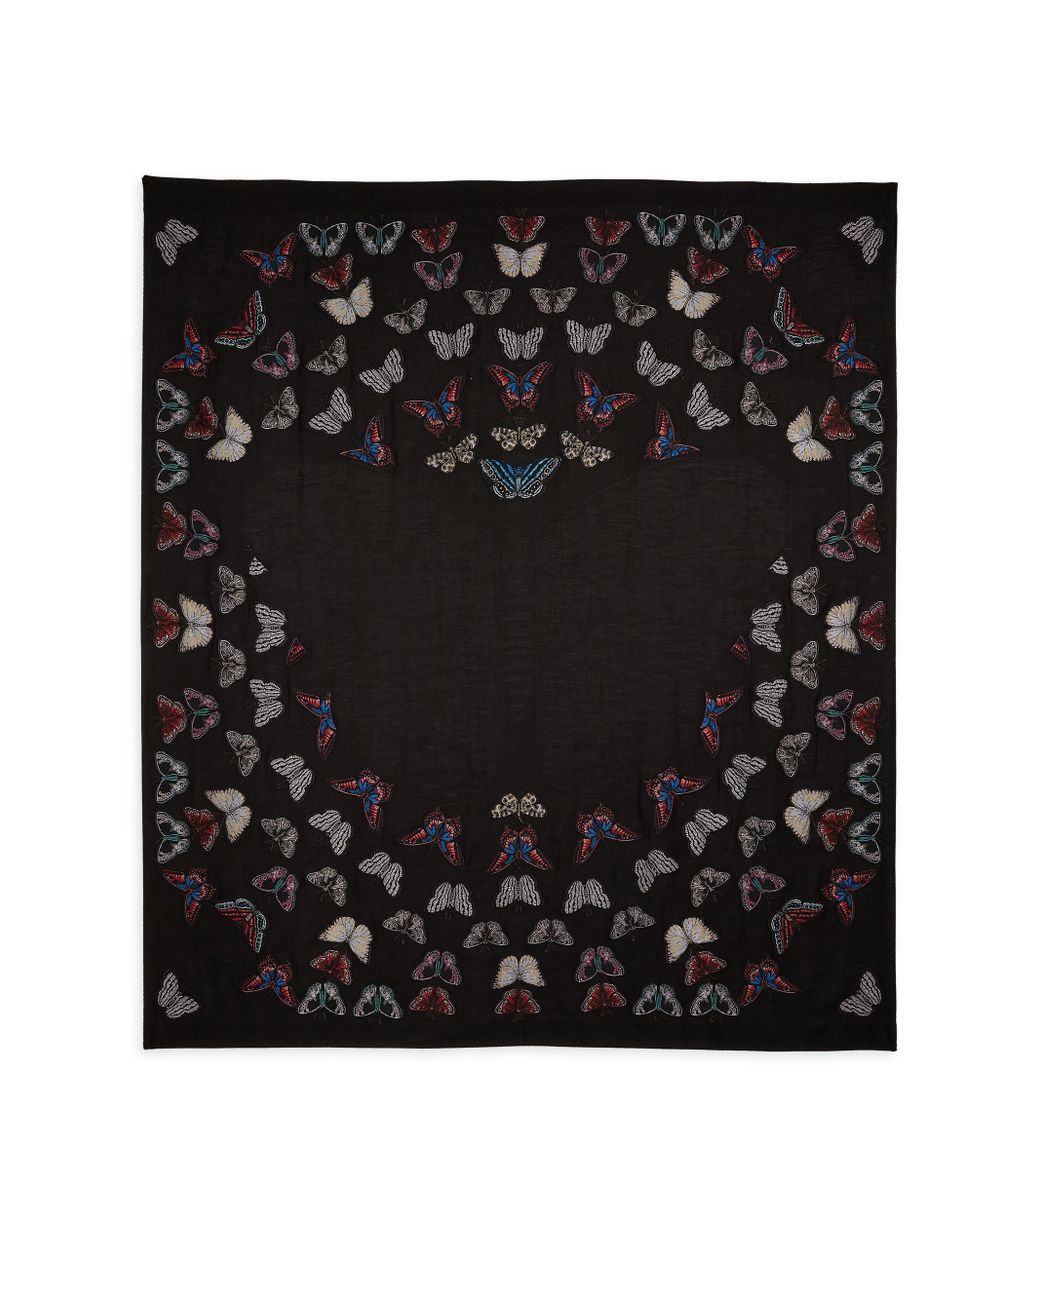 NWT $525 ALEXANDER MCQUEEN Metamorphosis Kaleidoscope Blue Butterfly Silk Scarf 